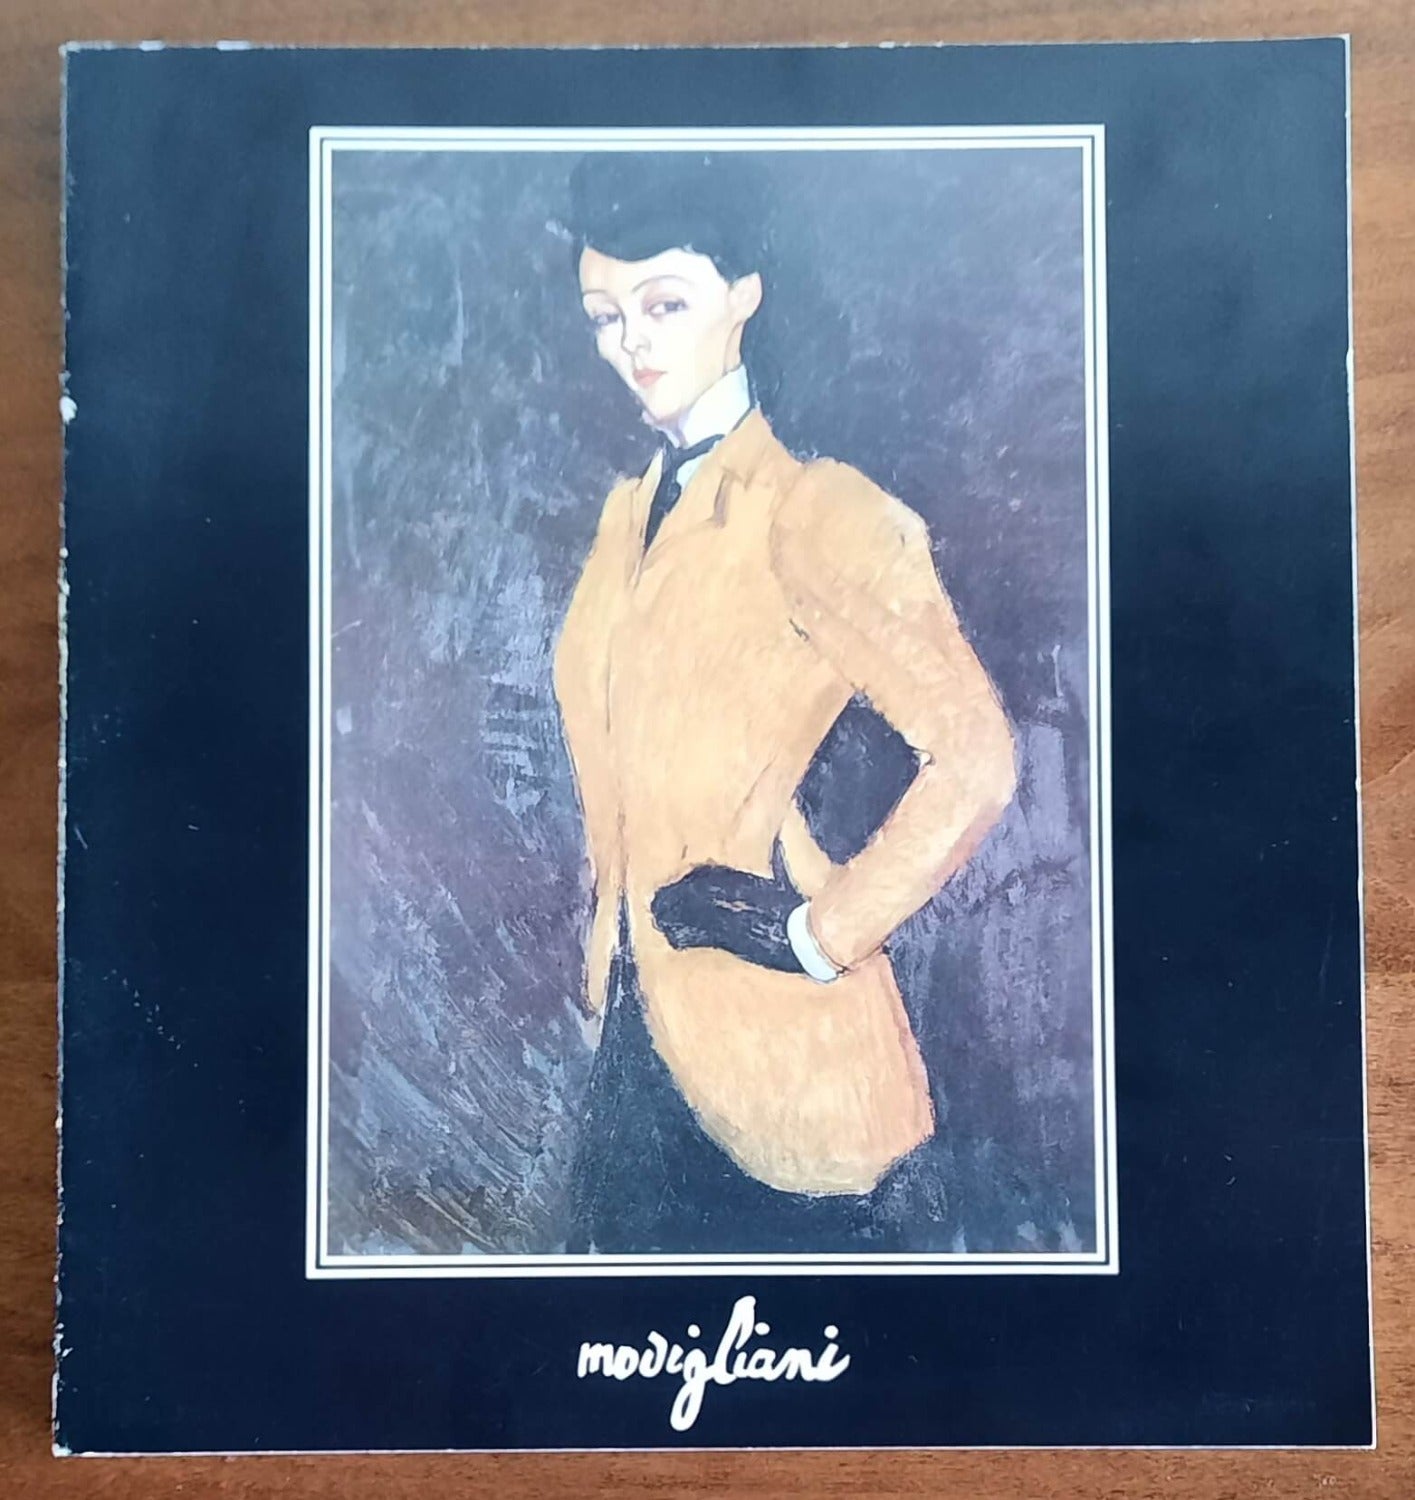 Amedeo Modigliani 1884 - 1920